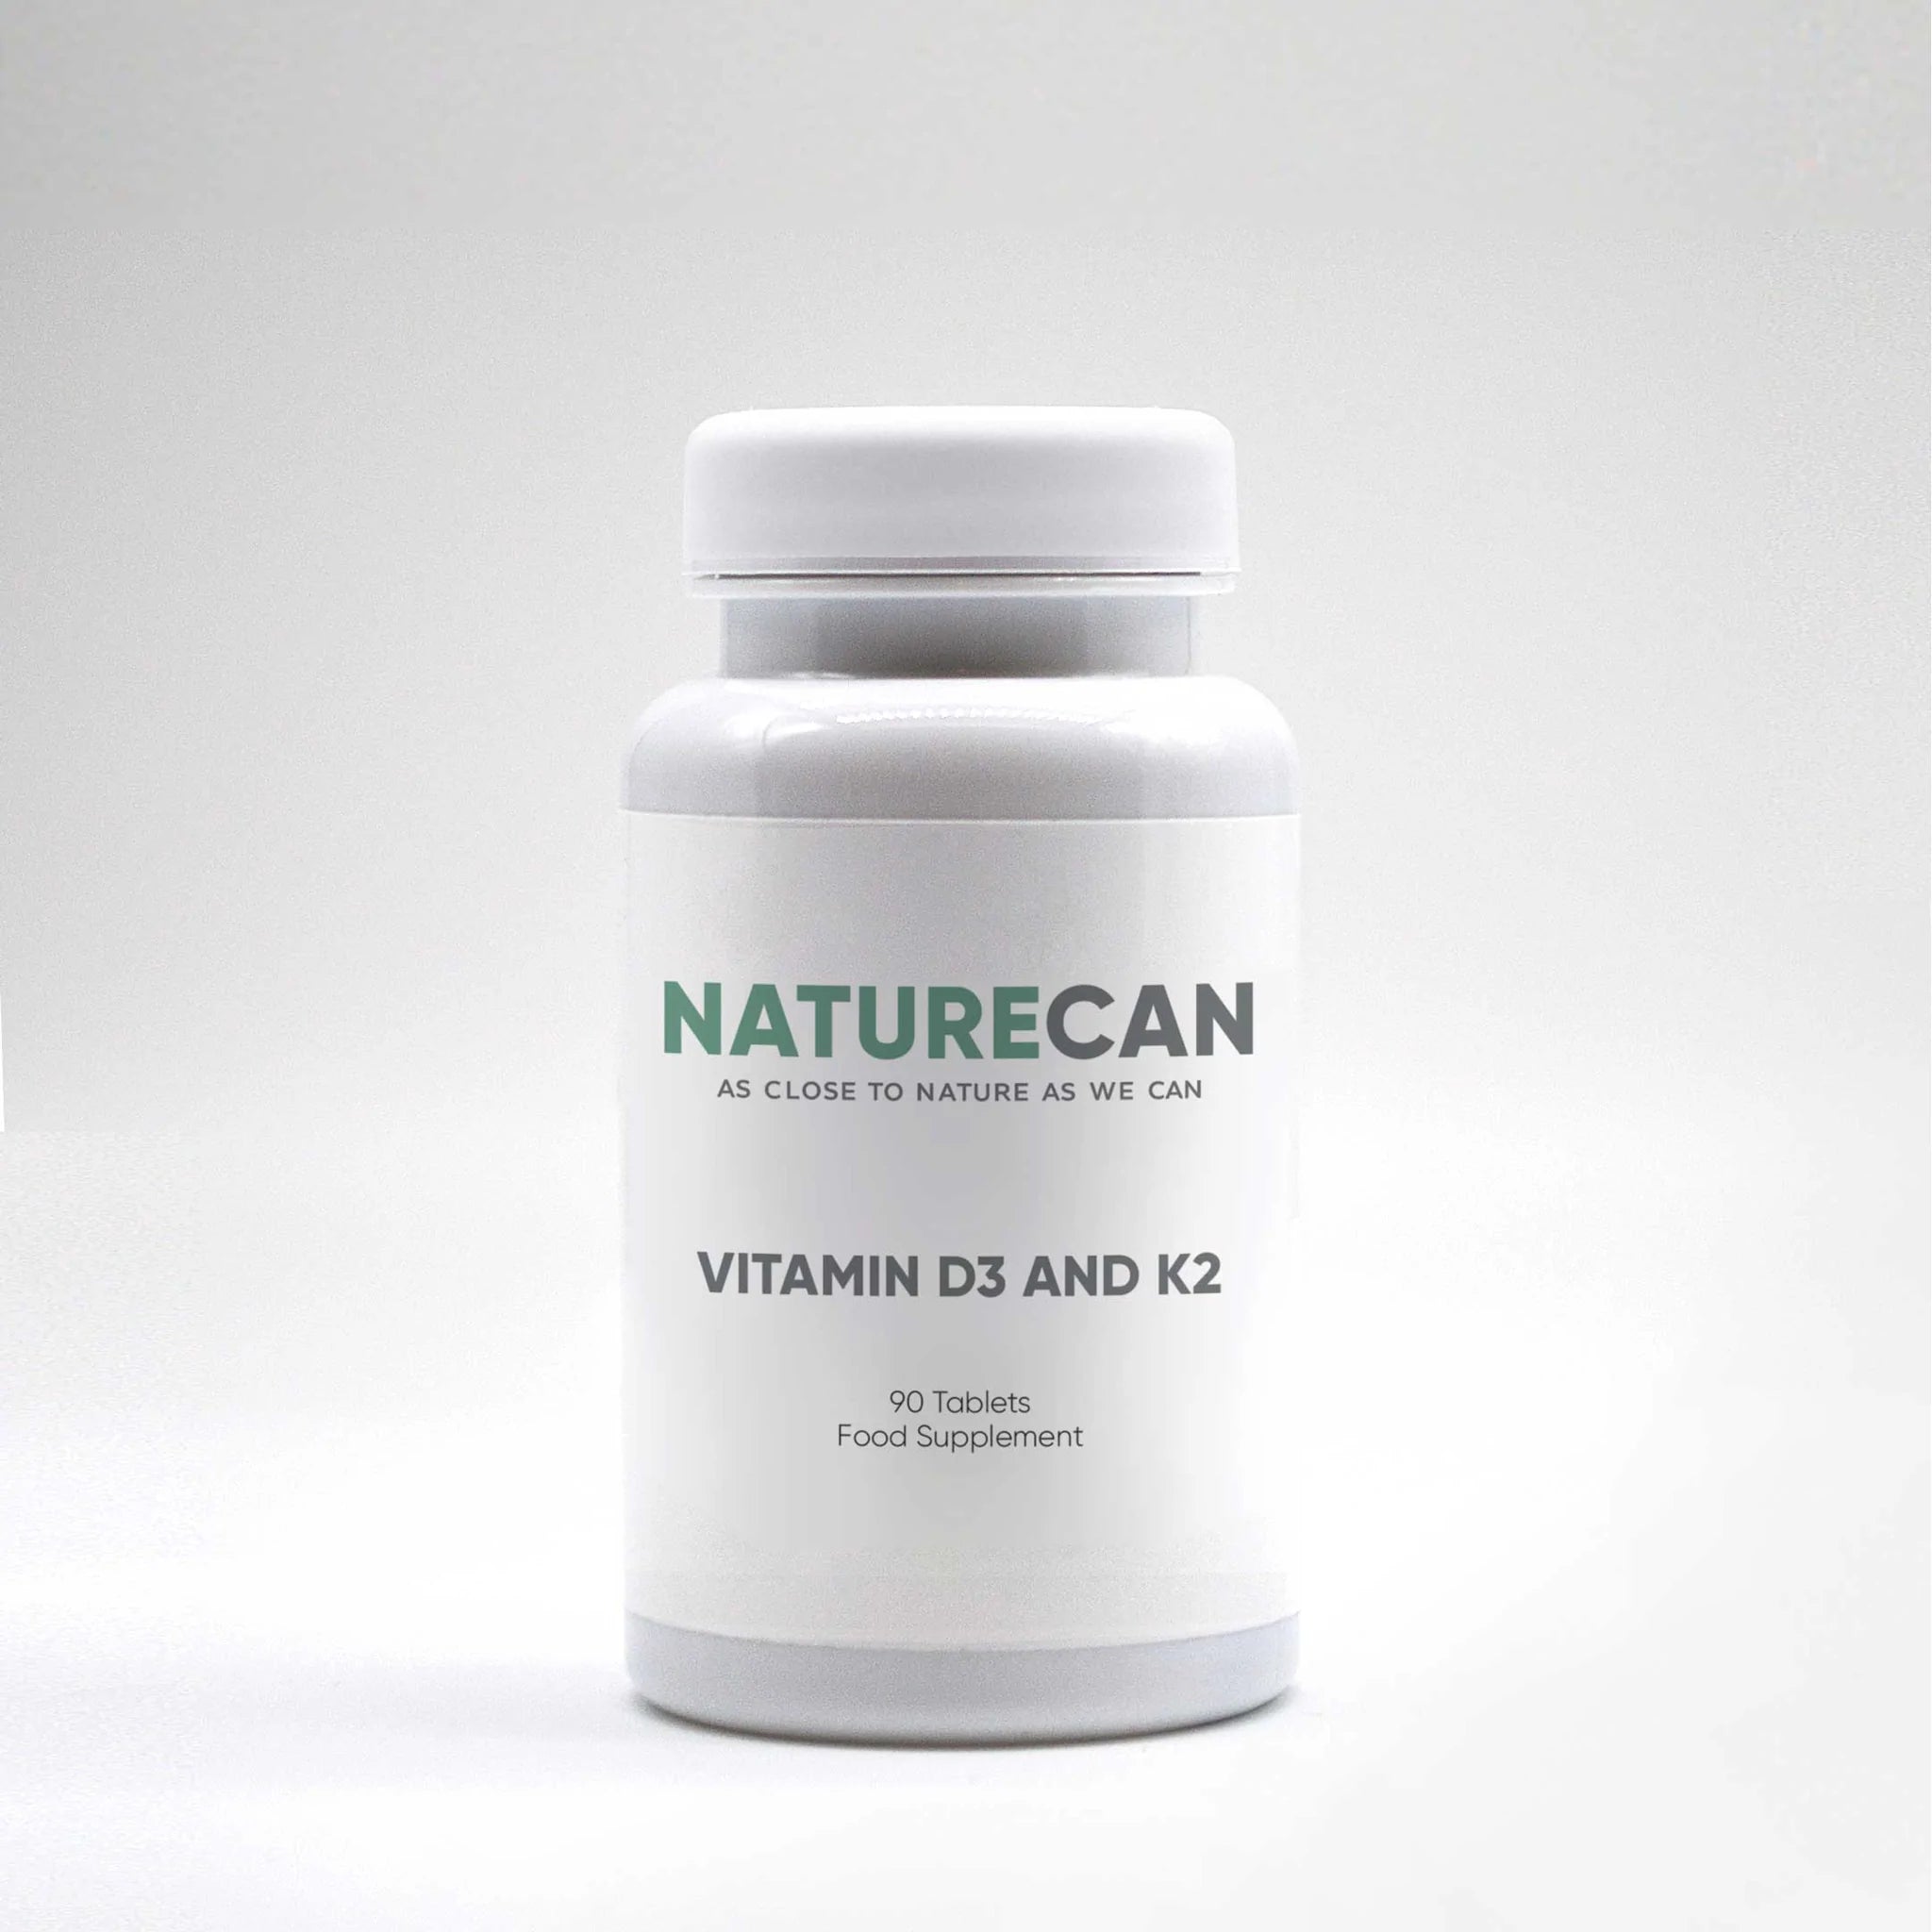 Naturecan vitamine D3 and 2K